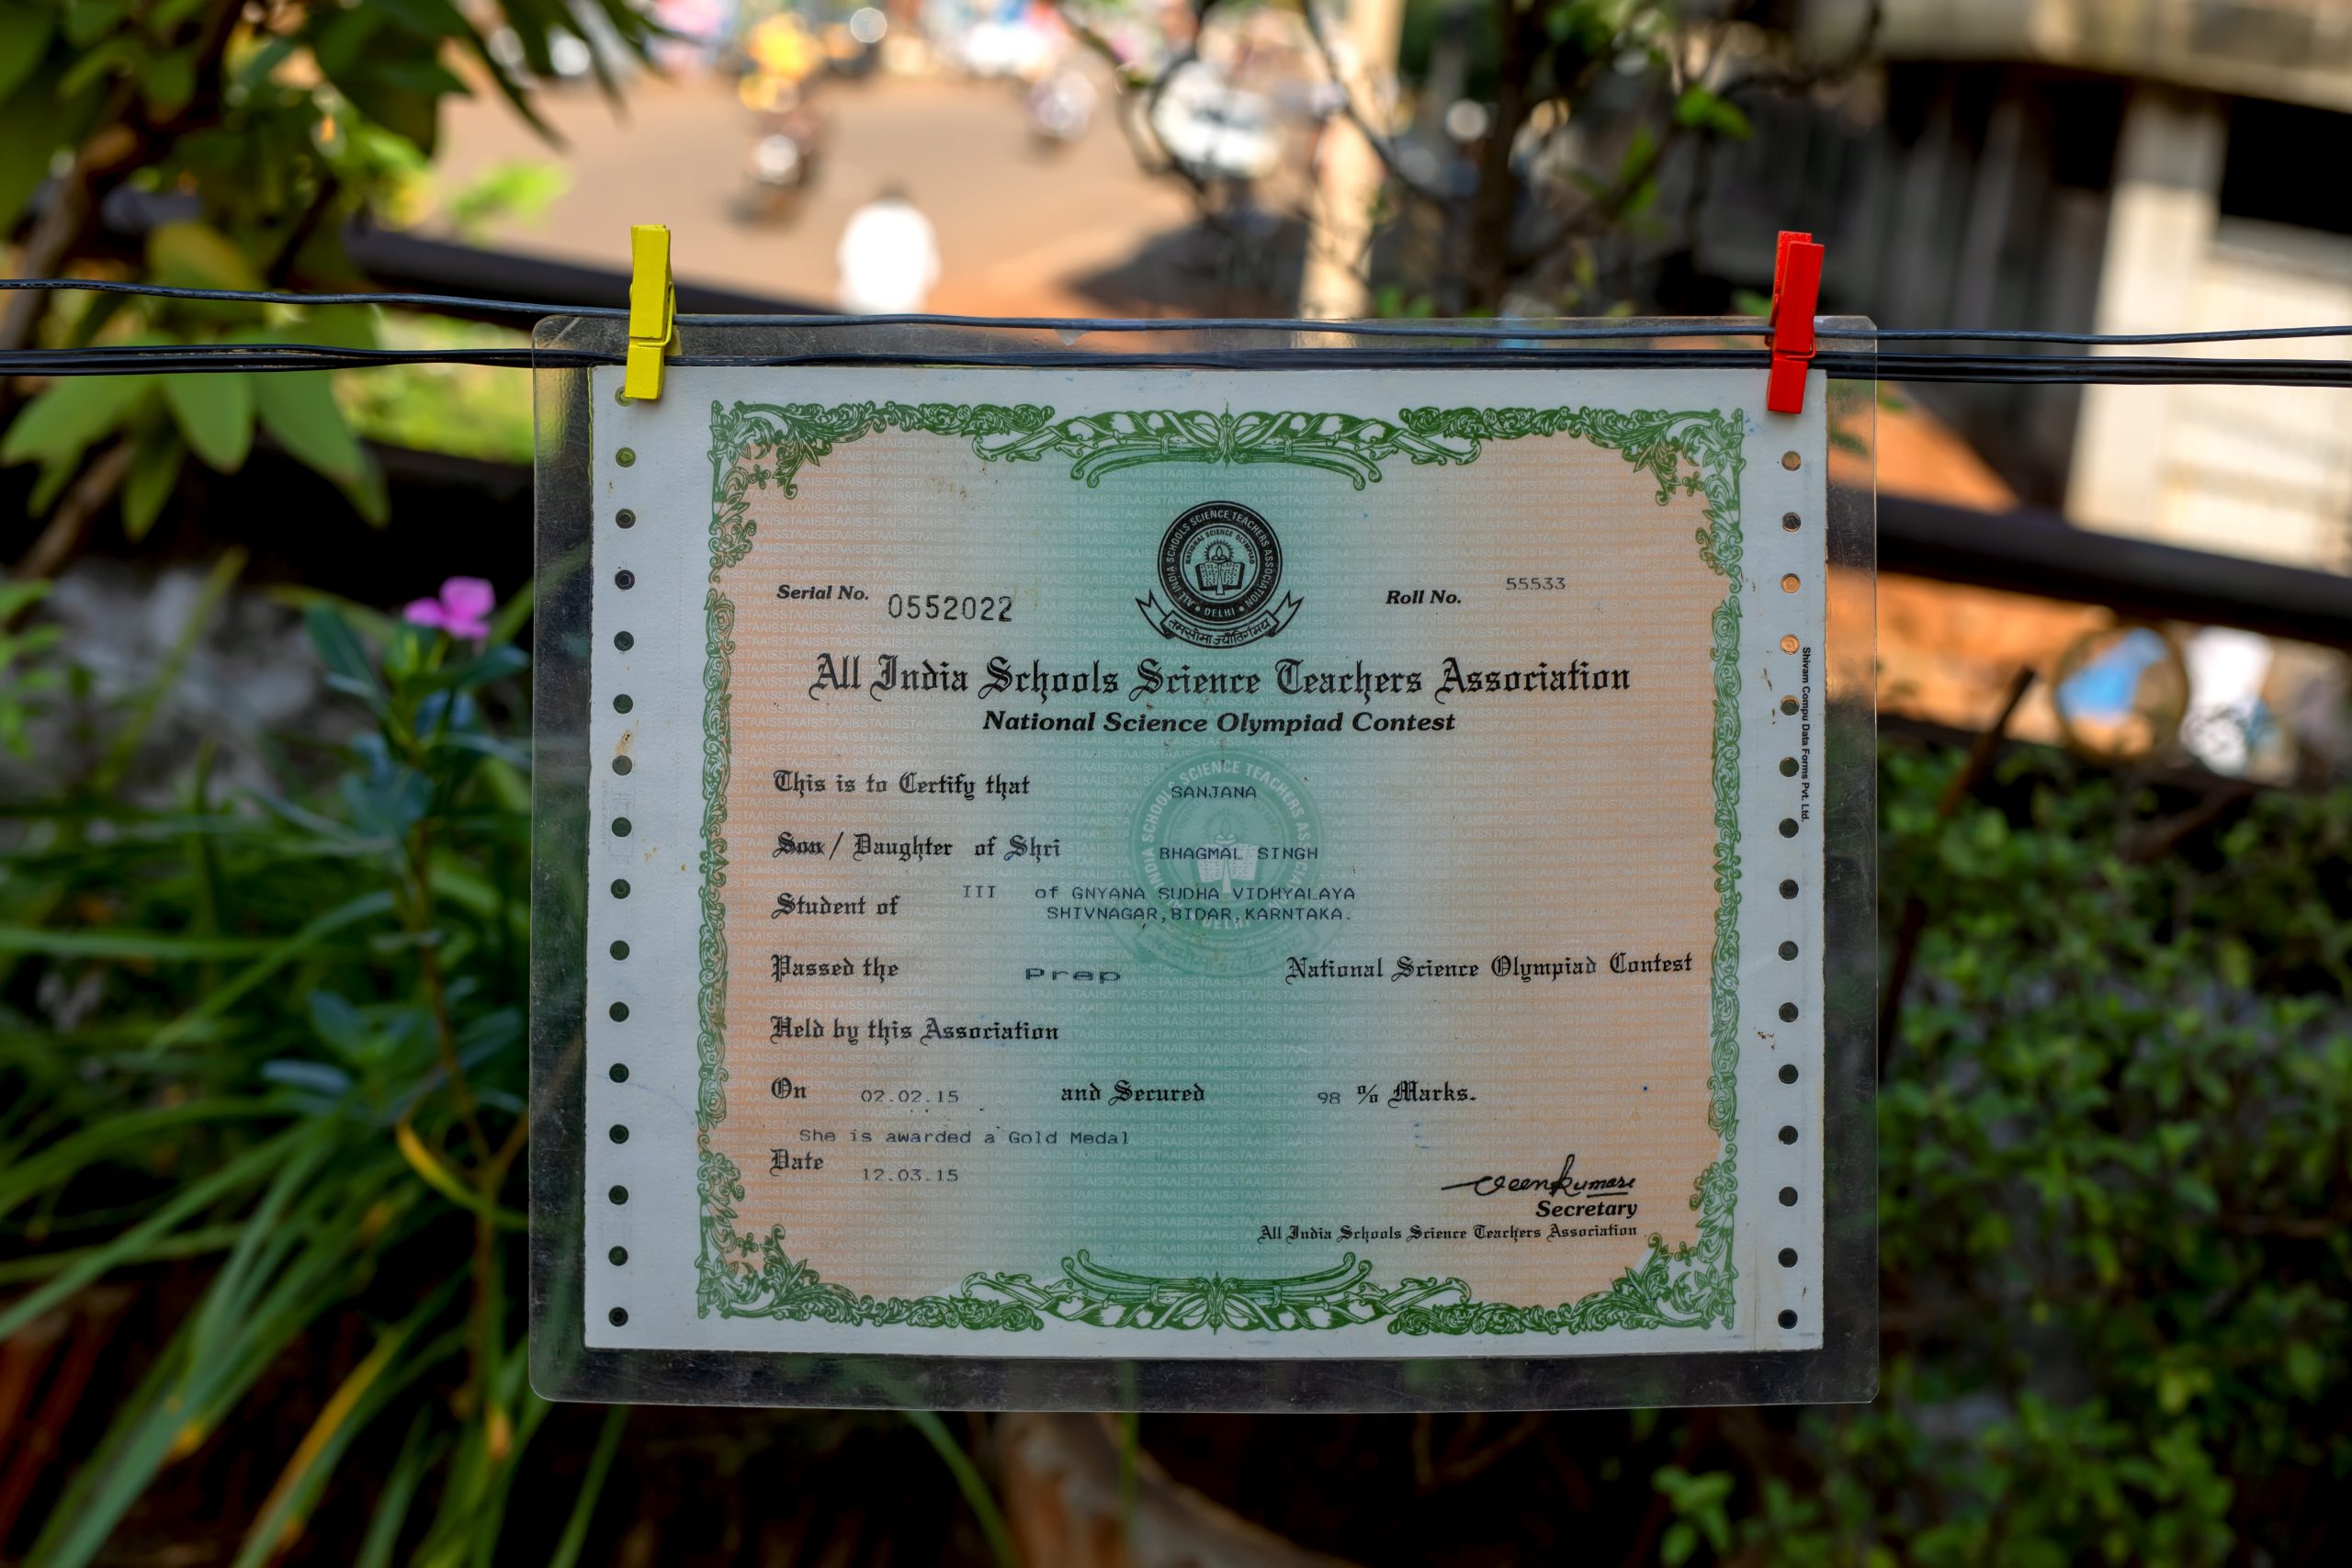 A participation certificate